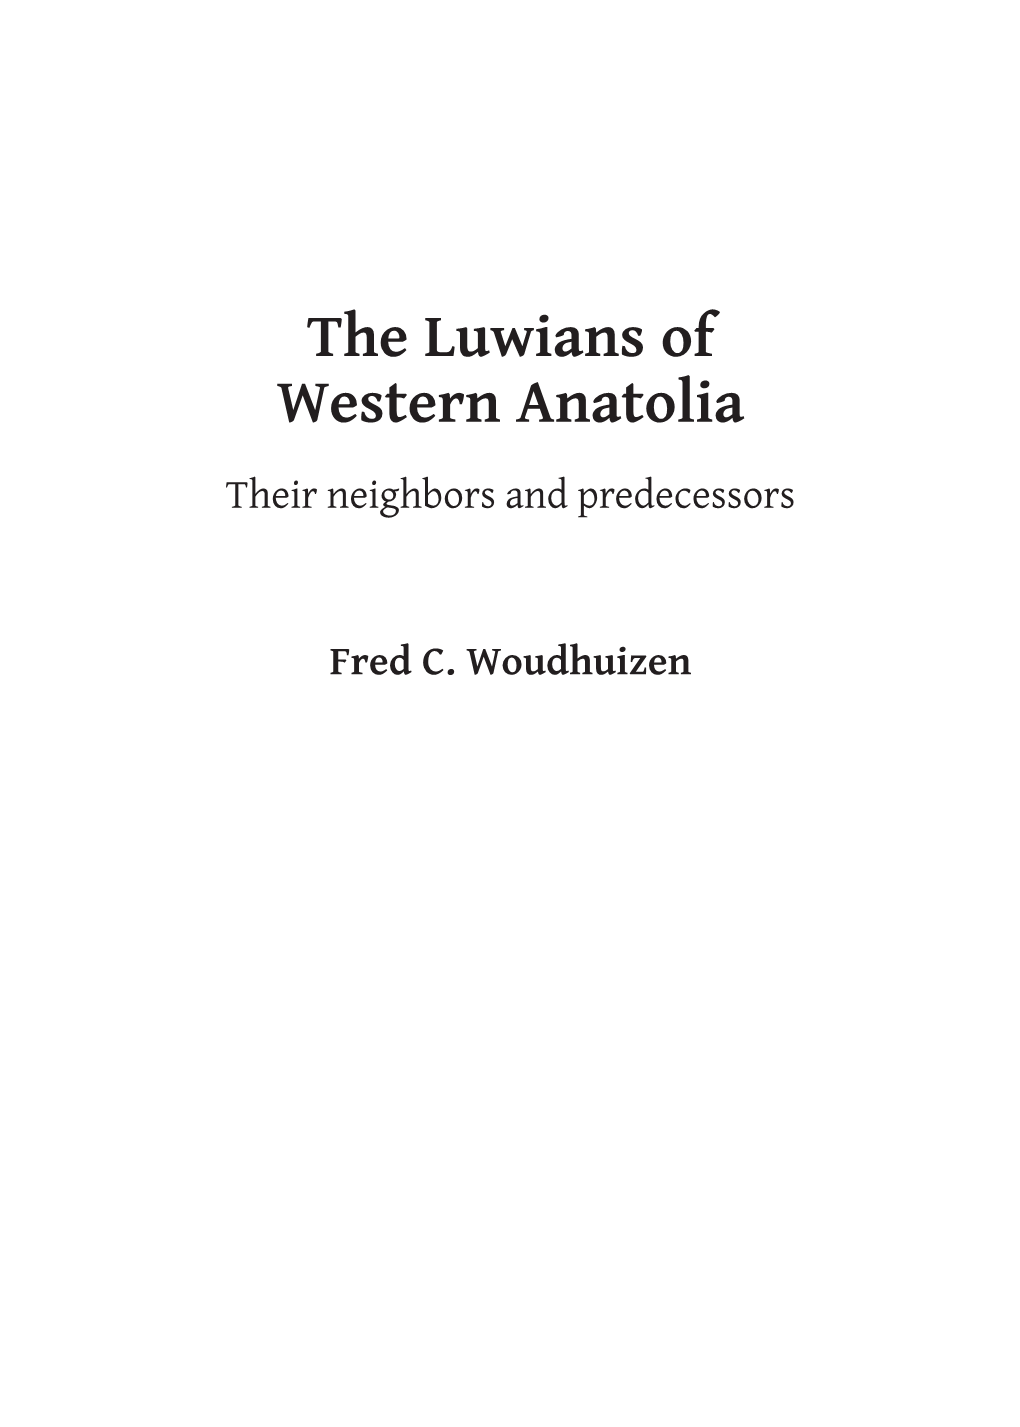 The Luwians of Western Anatolia